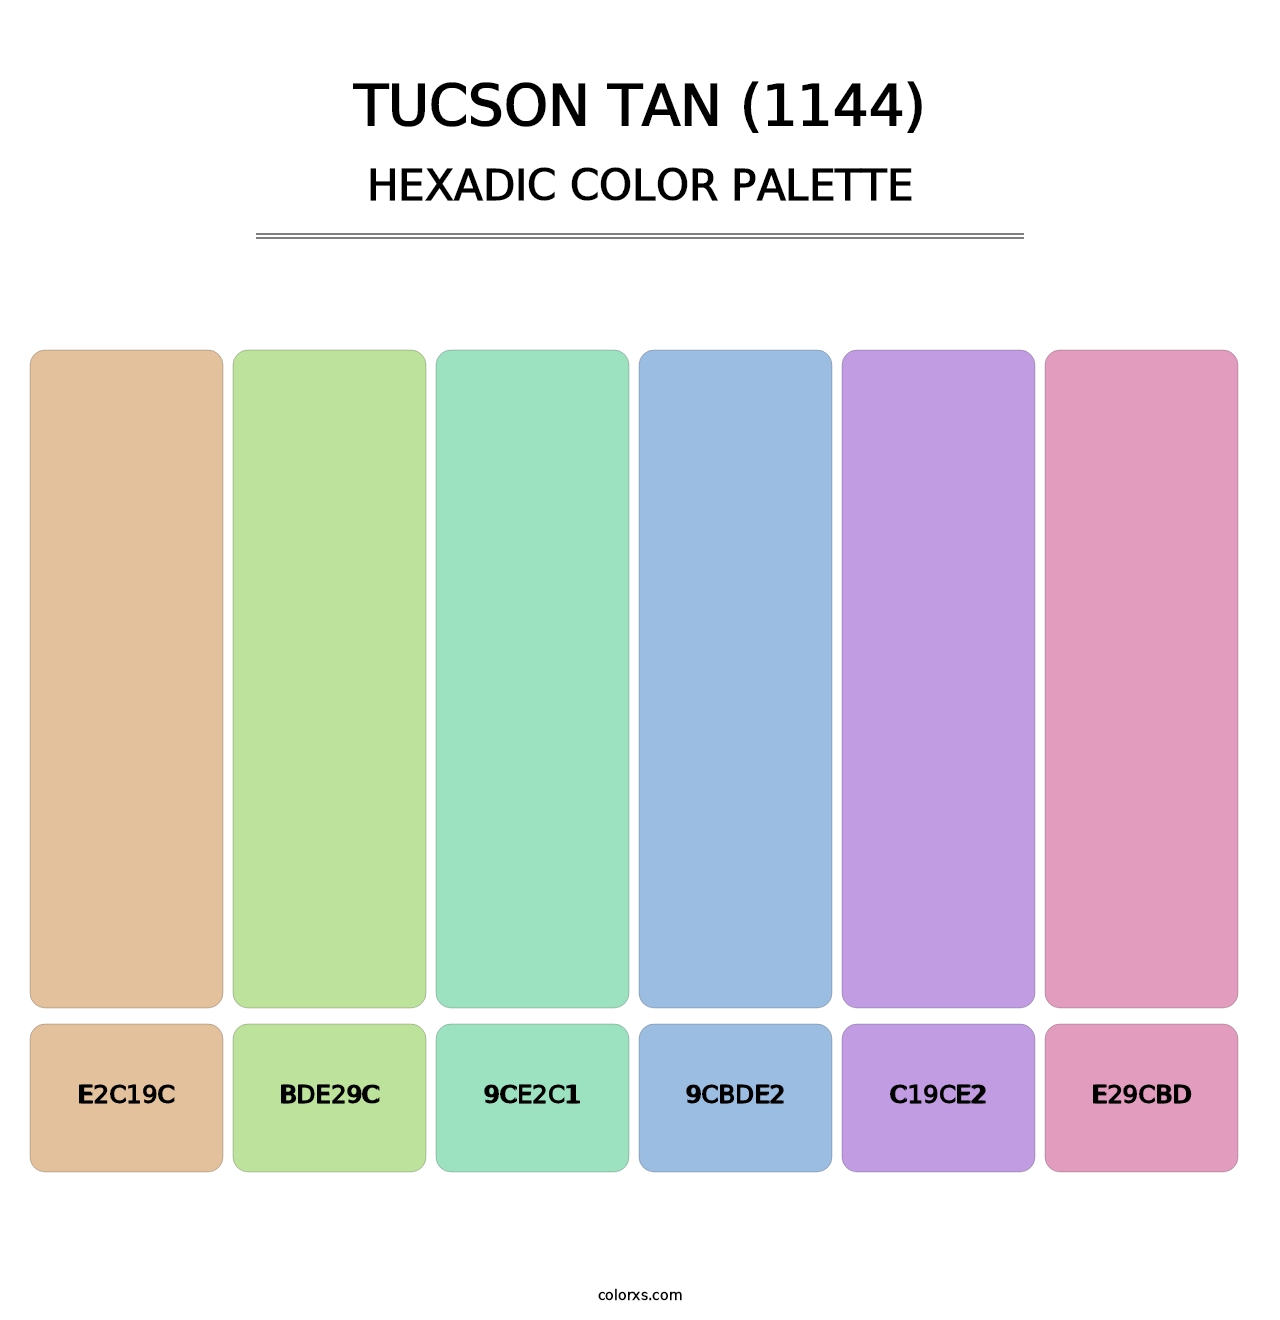 Tucson Tan (1144) - Hexadic Color Palette